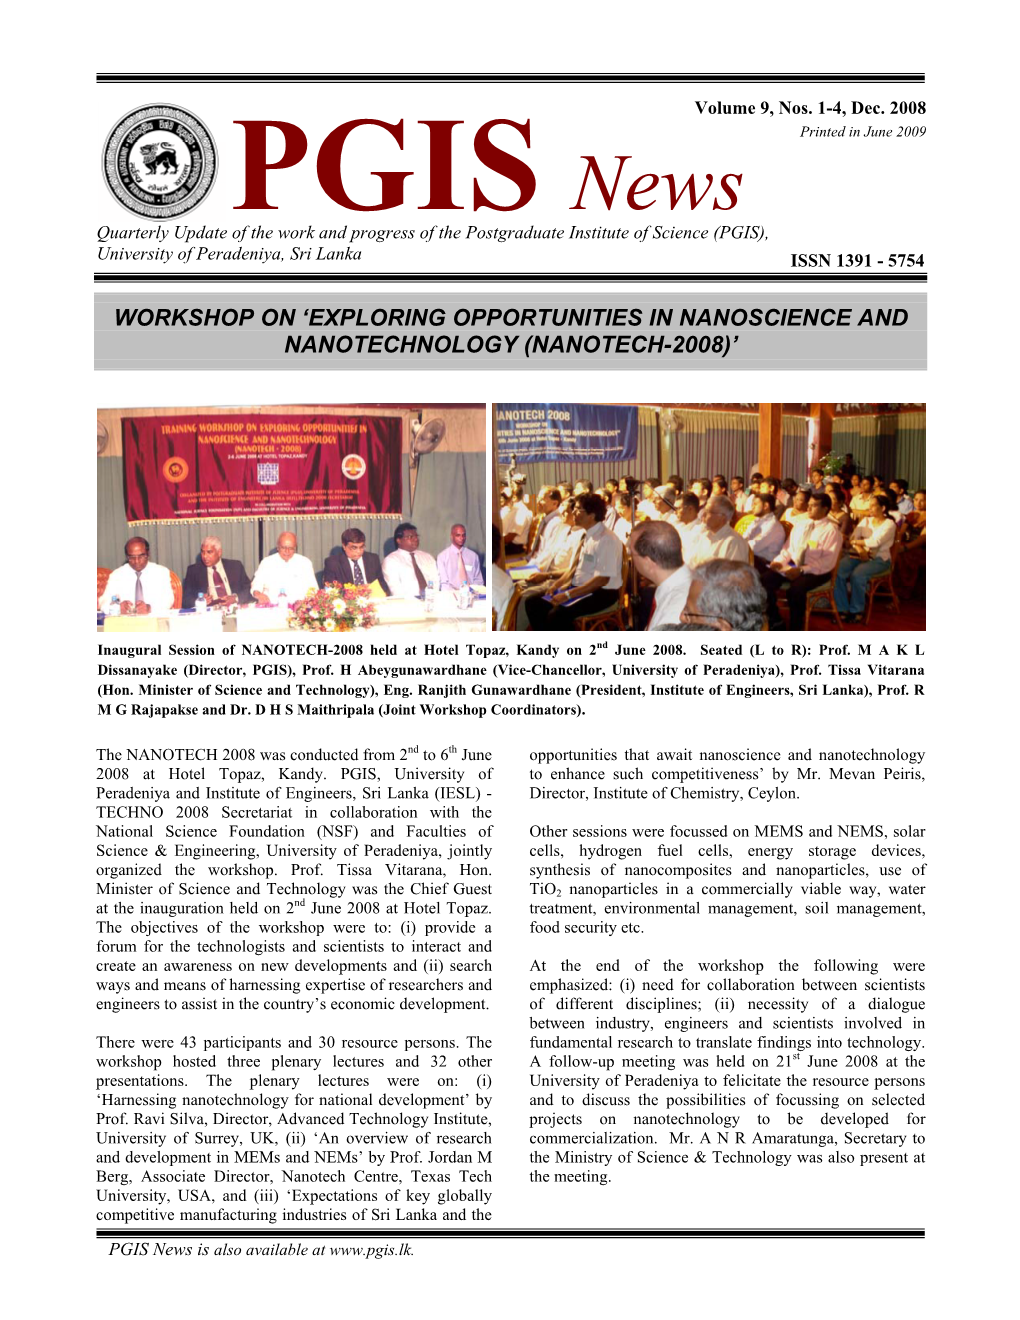 PGIS News Quarterly Update of the Work and Progress of the Postgraduate Institute of Science (PGIS), University of Peradeniya, Sri Lanka ISSN 1391 - 5754